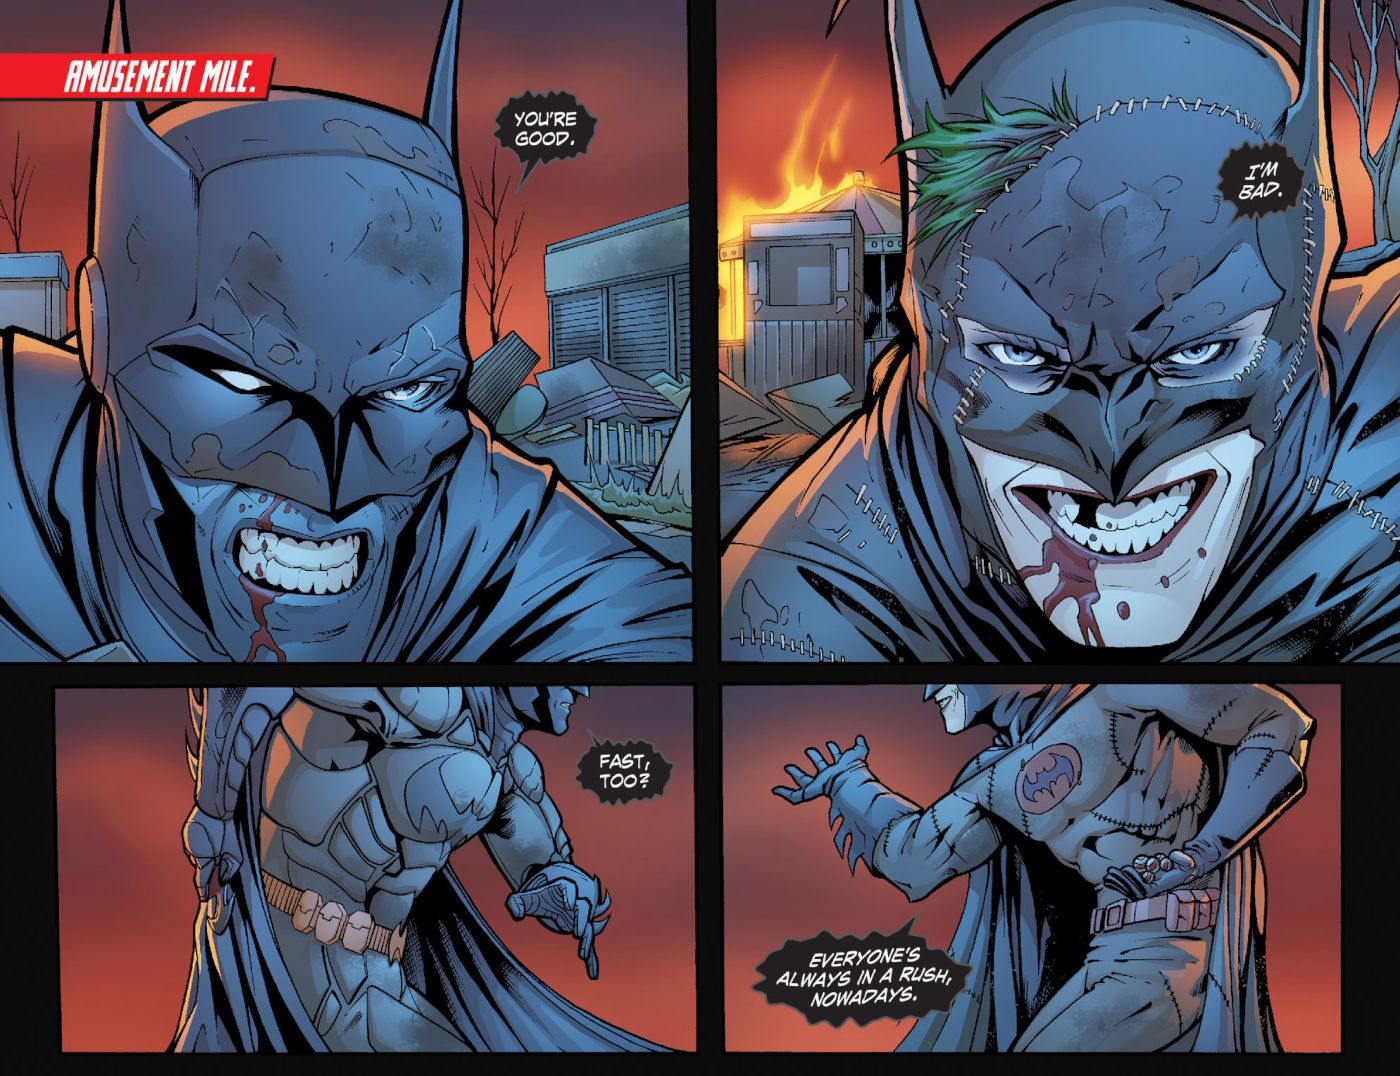 Smallville: Alien #11, Batman confronts an alternate version of himself who has become the Joker